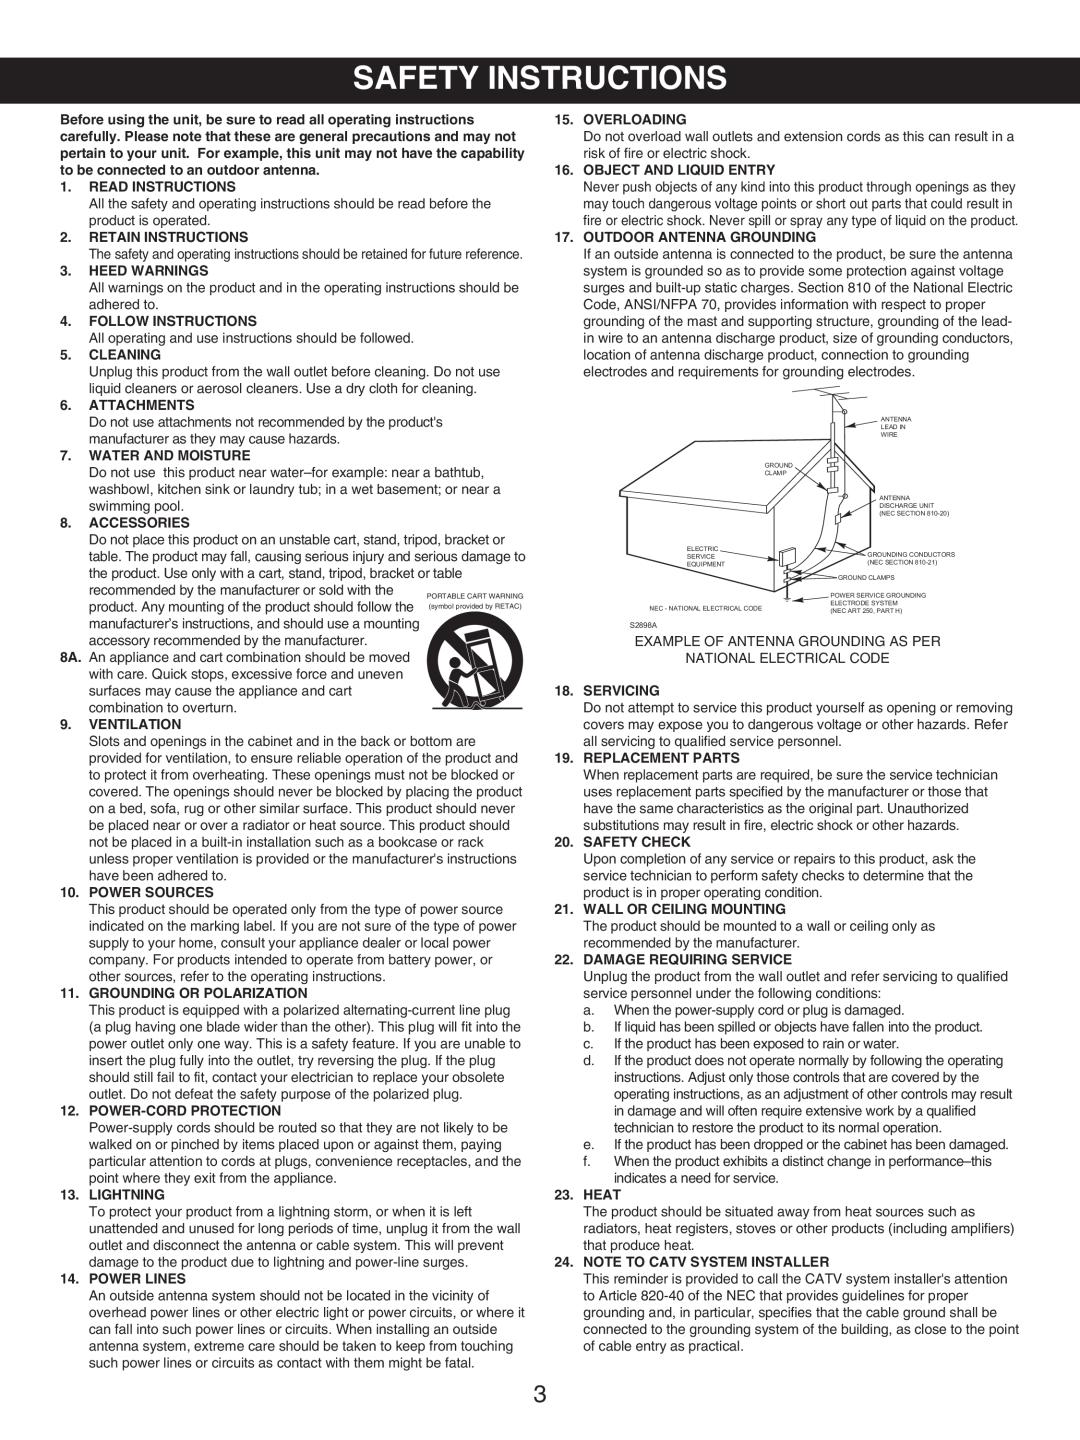 Memorex MKS8503 manual Safety Instructions 